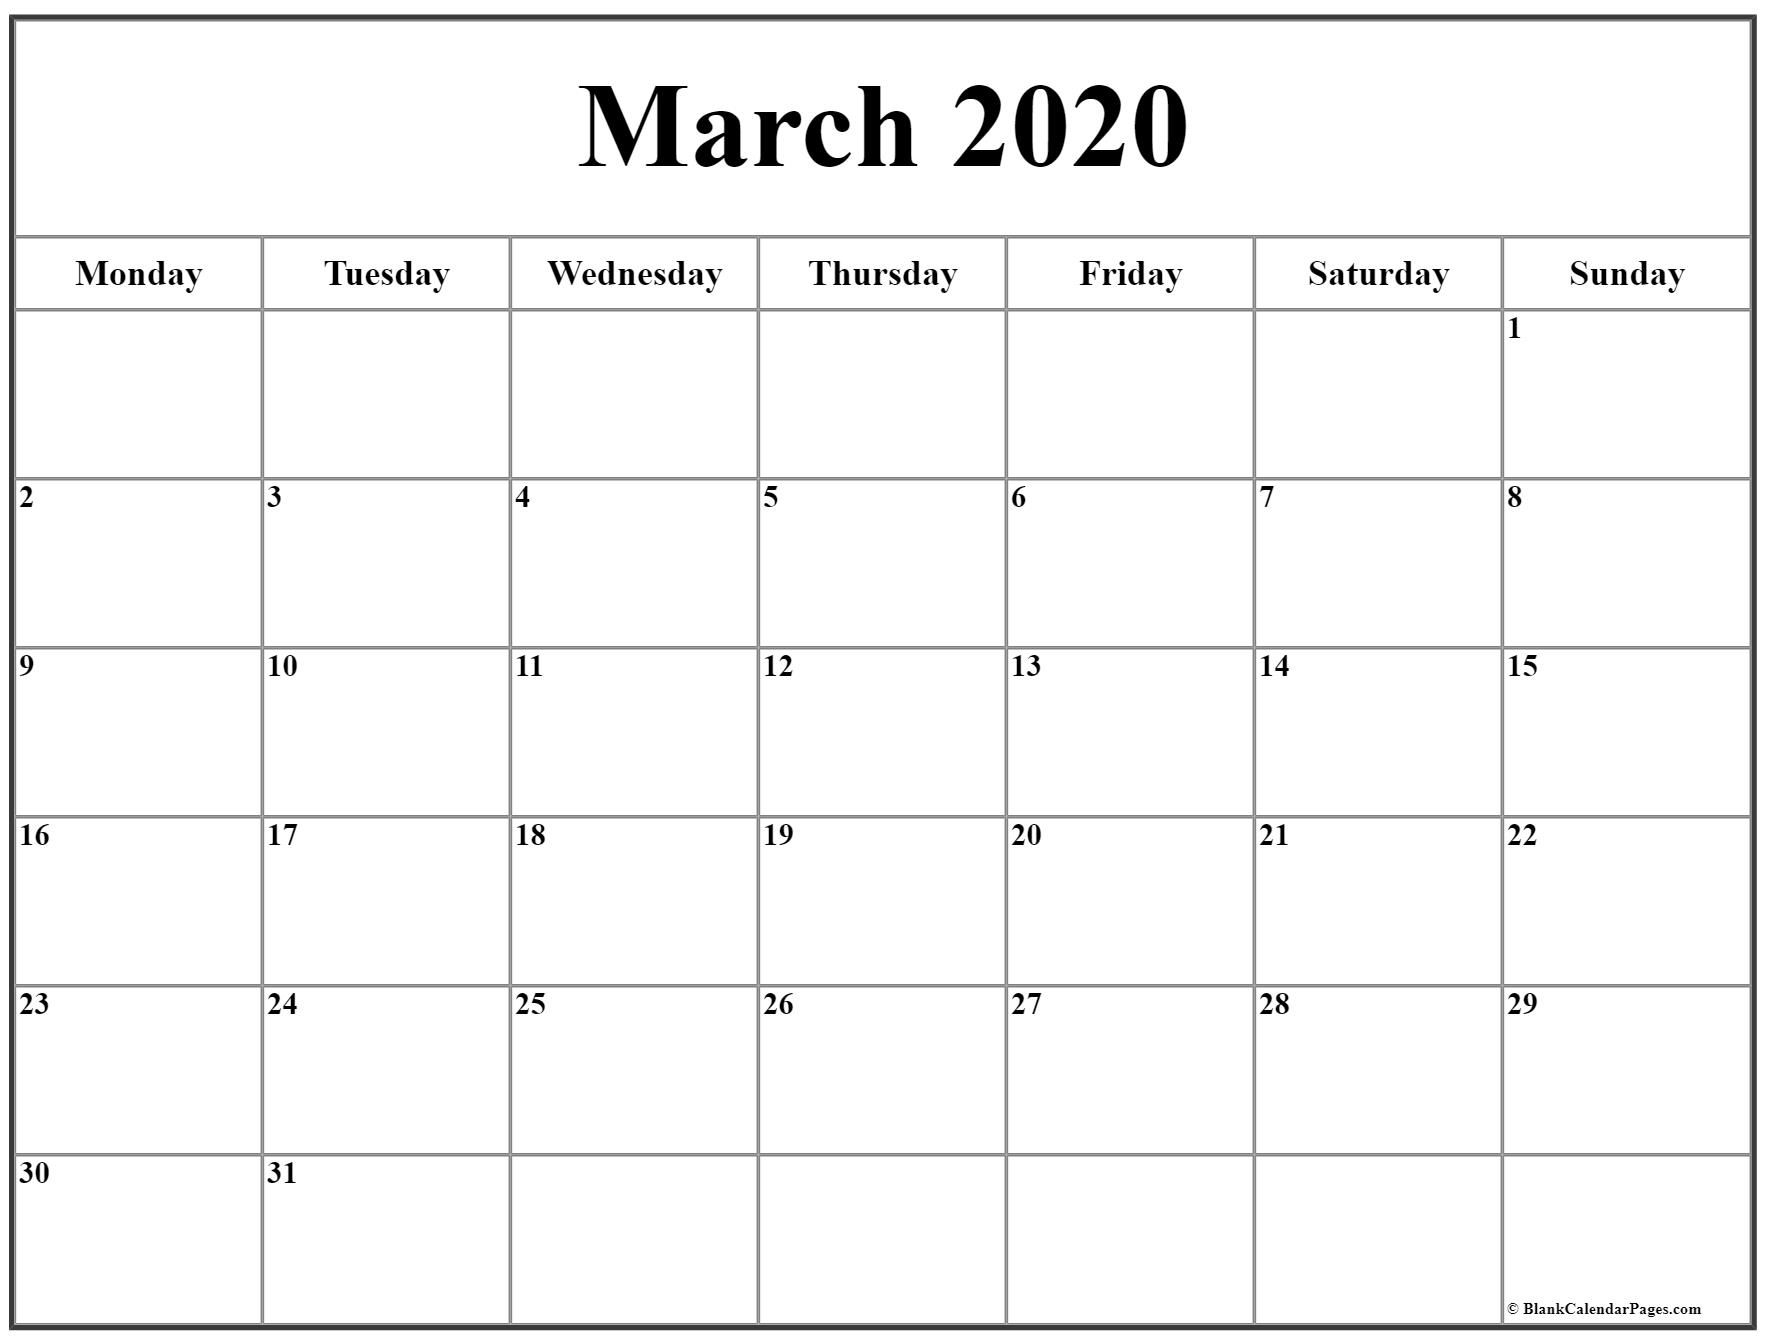 March 2020 Monday Calendar | Monday To Sunday